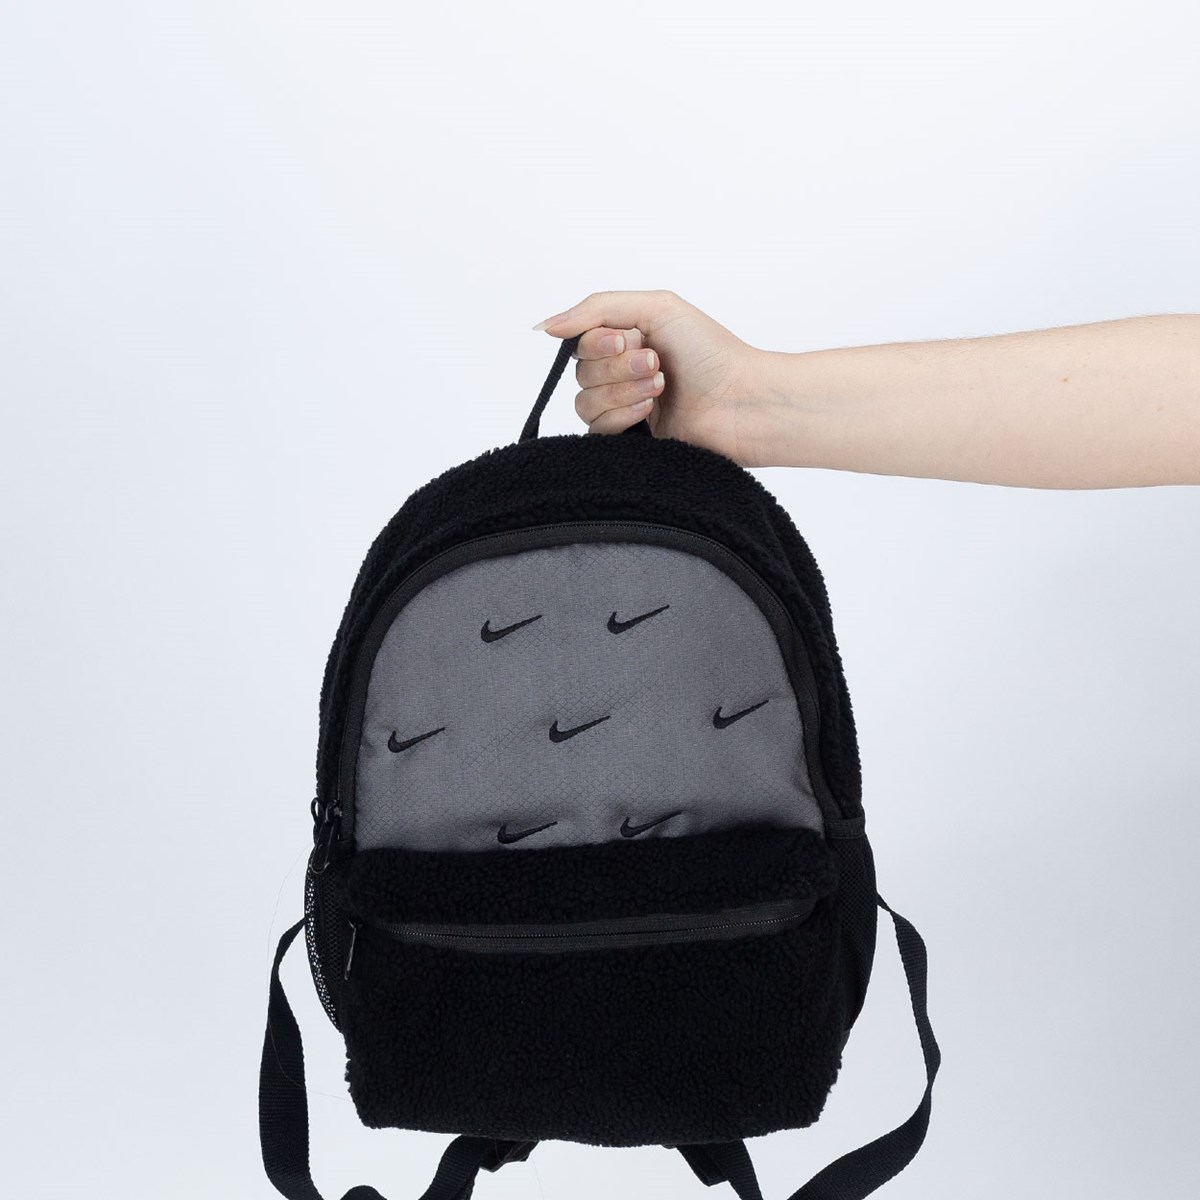 Mini Mochila Nike Brasilia Jdi Backpack Sherpa Black Black DQ5340-010